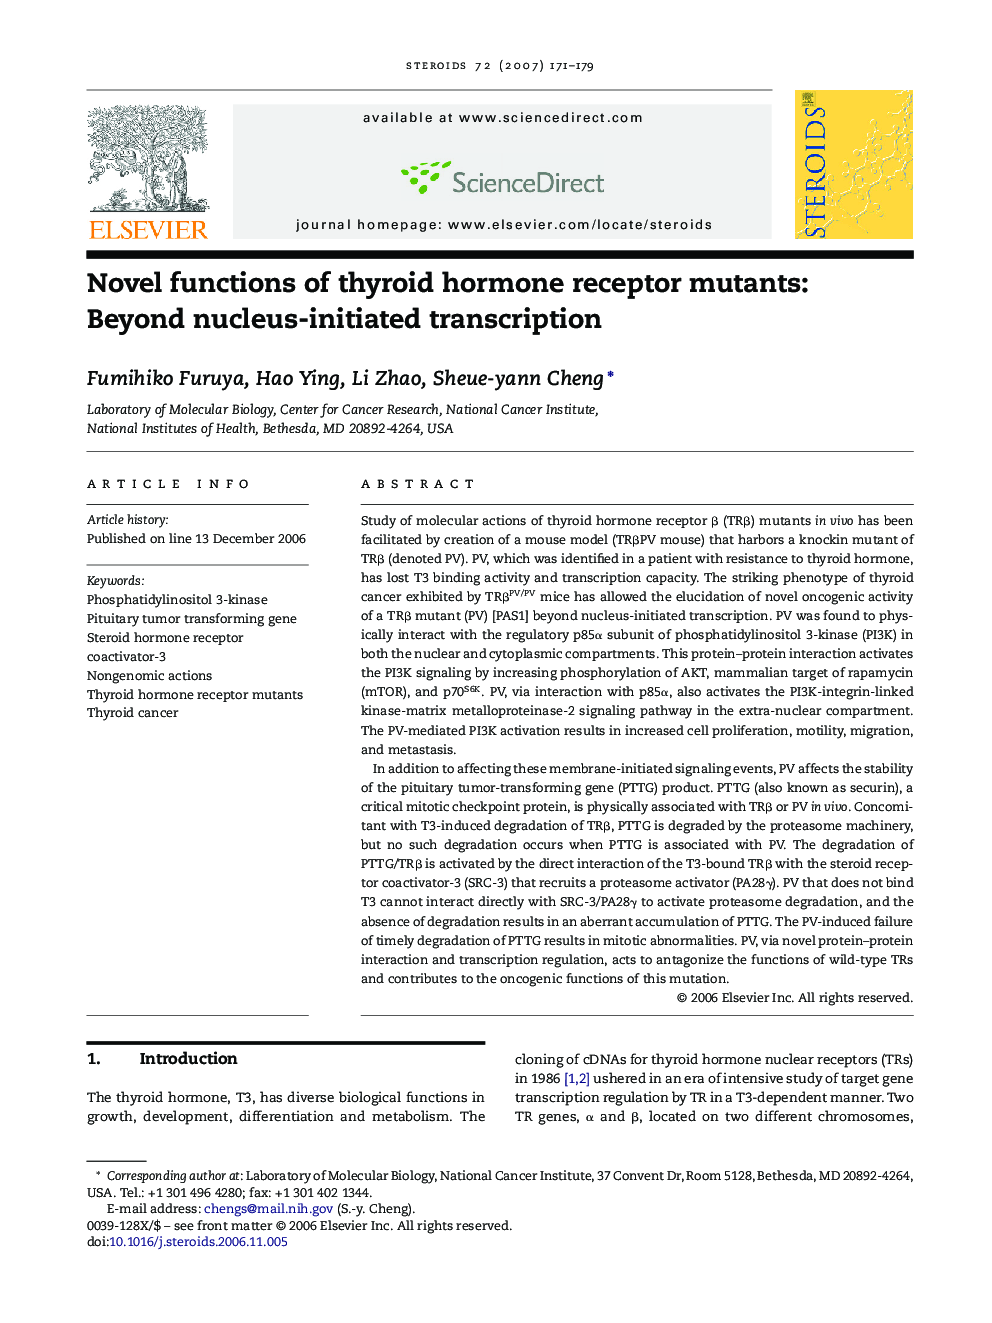 Novel functions of thyroid hormone receptor mutants: Beyond nucleus-initiated transcription